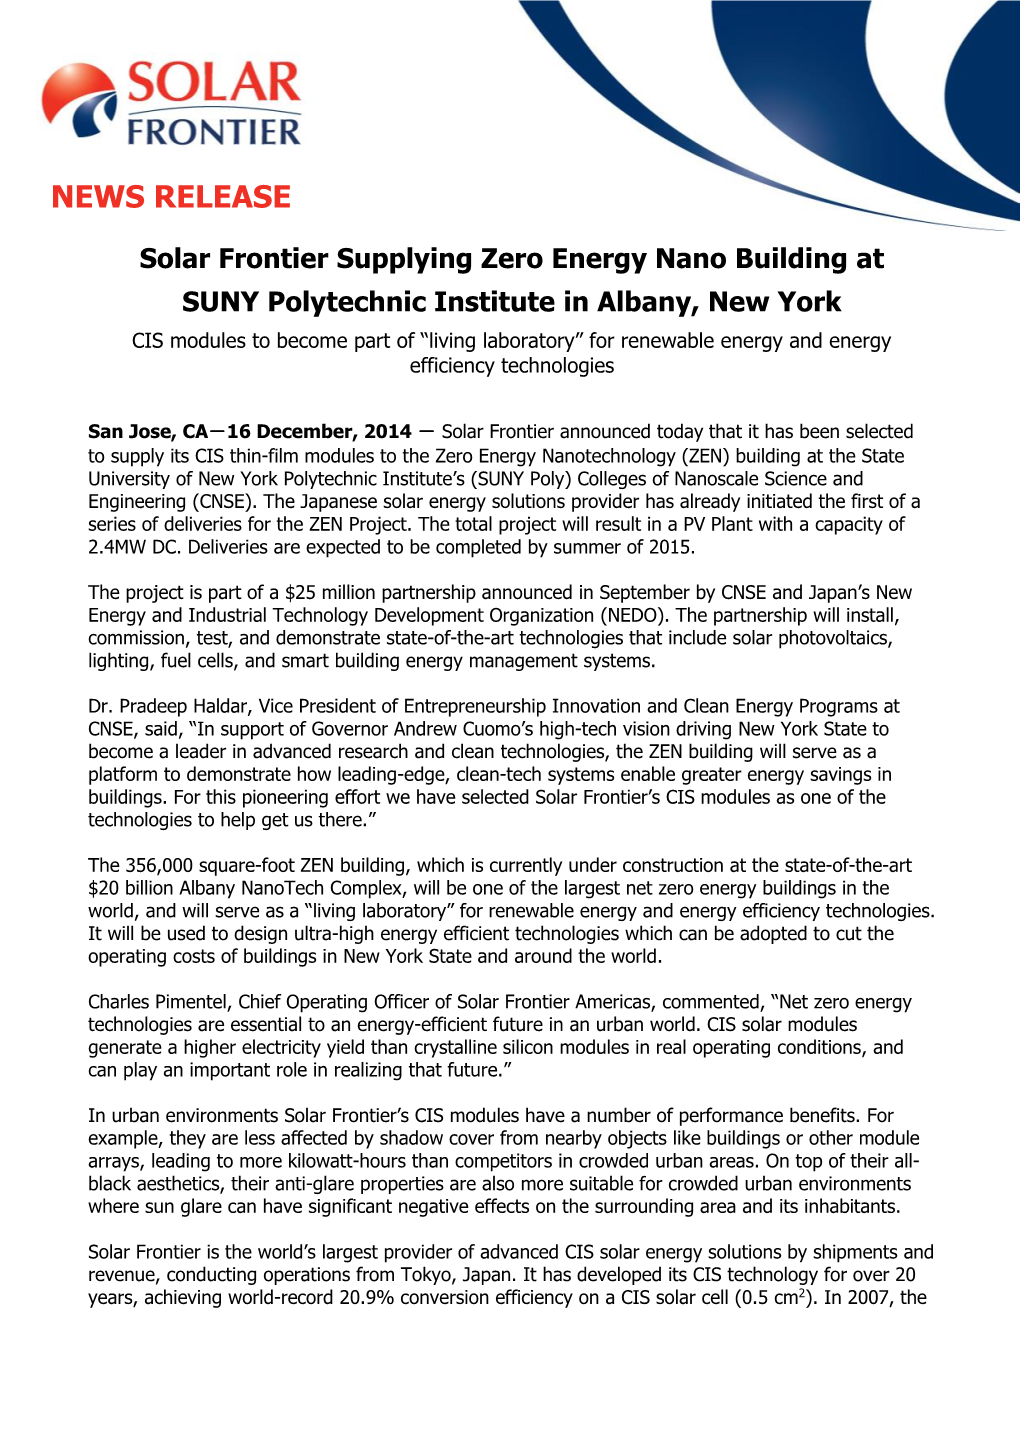 Solar Frontier Supplying Zero Energy Nano Building at SUNY Polytechnic